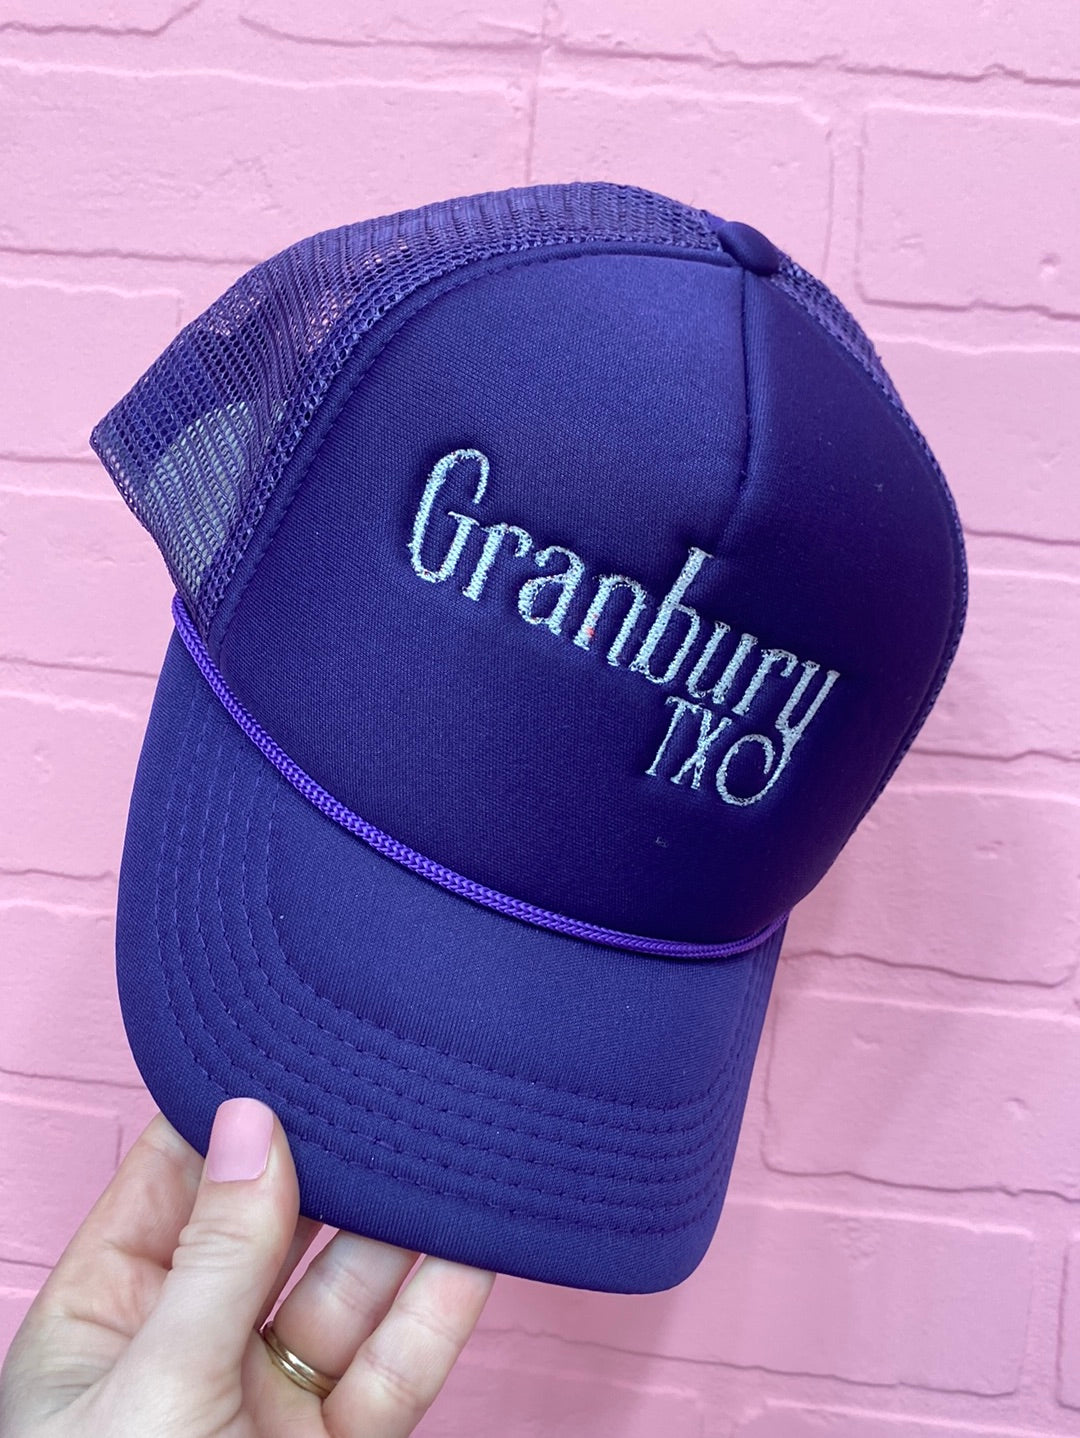 Granbury Trucker Hat